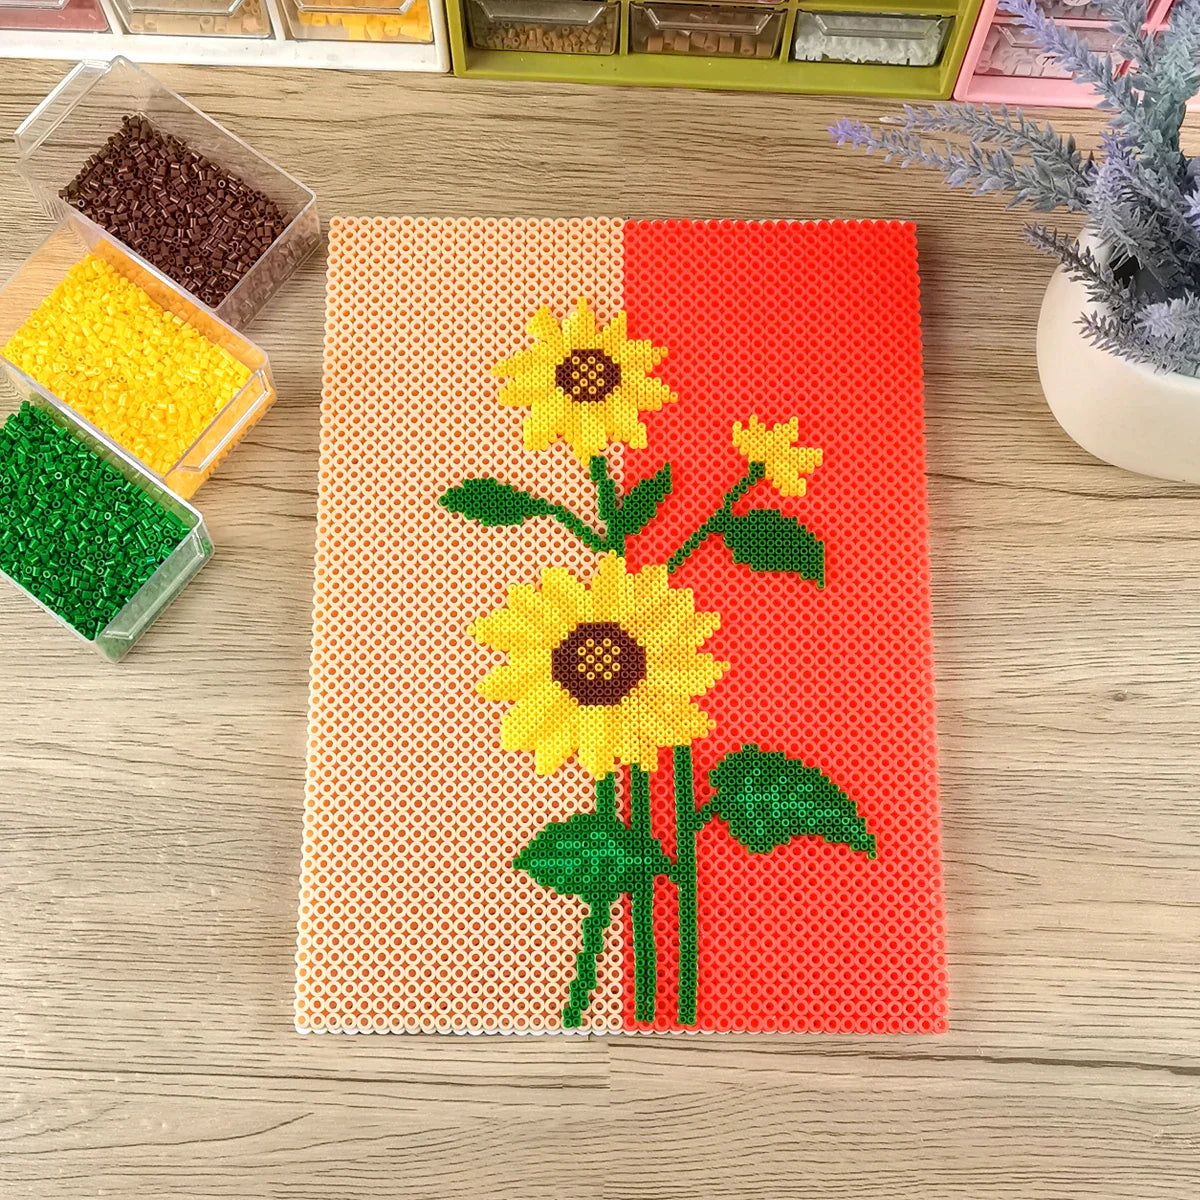 artkal fuse beads sunflower painting